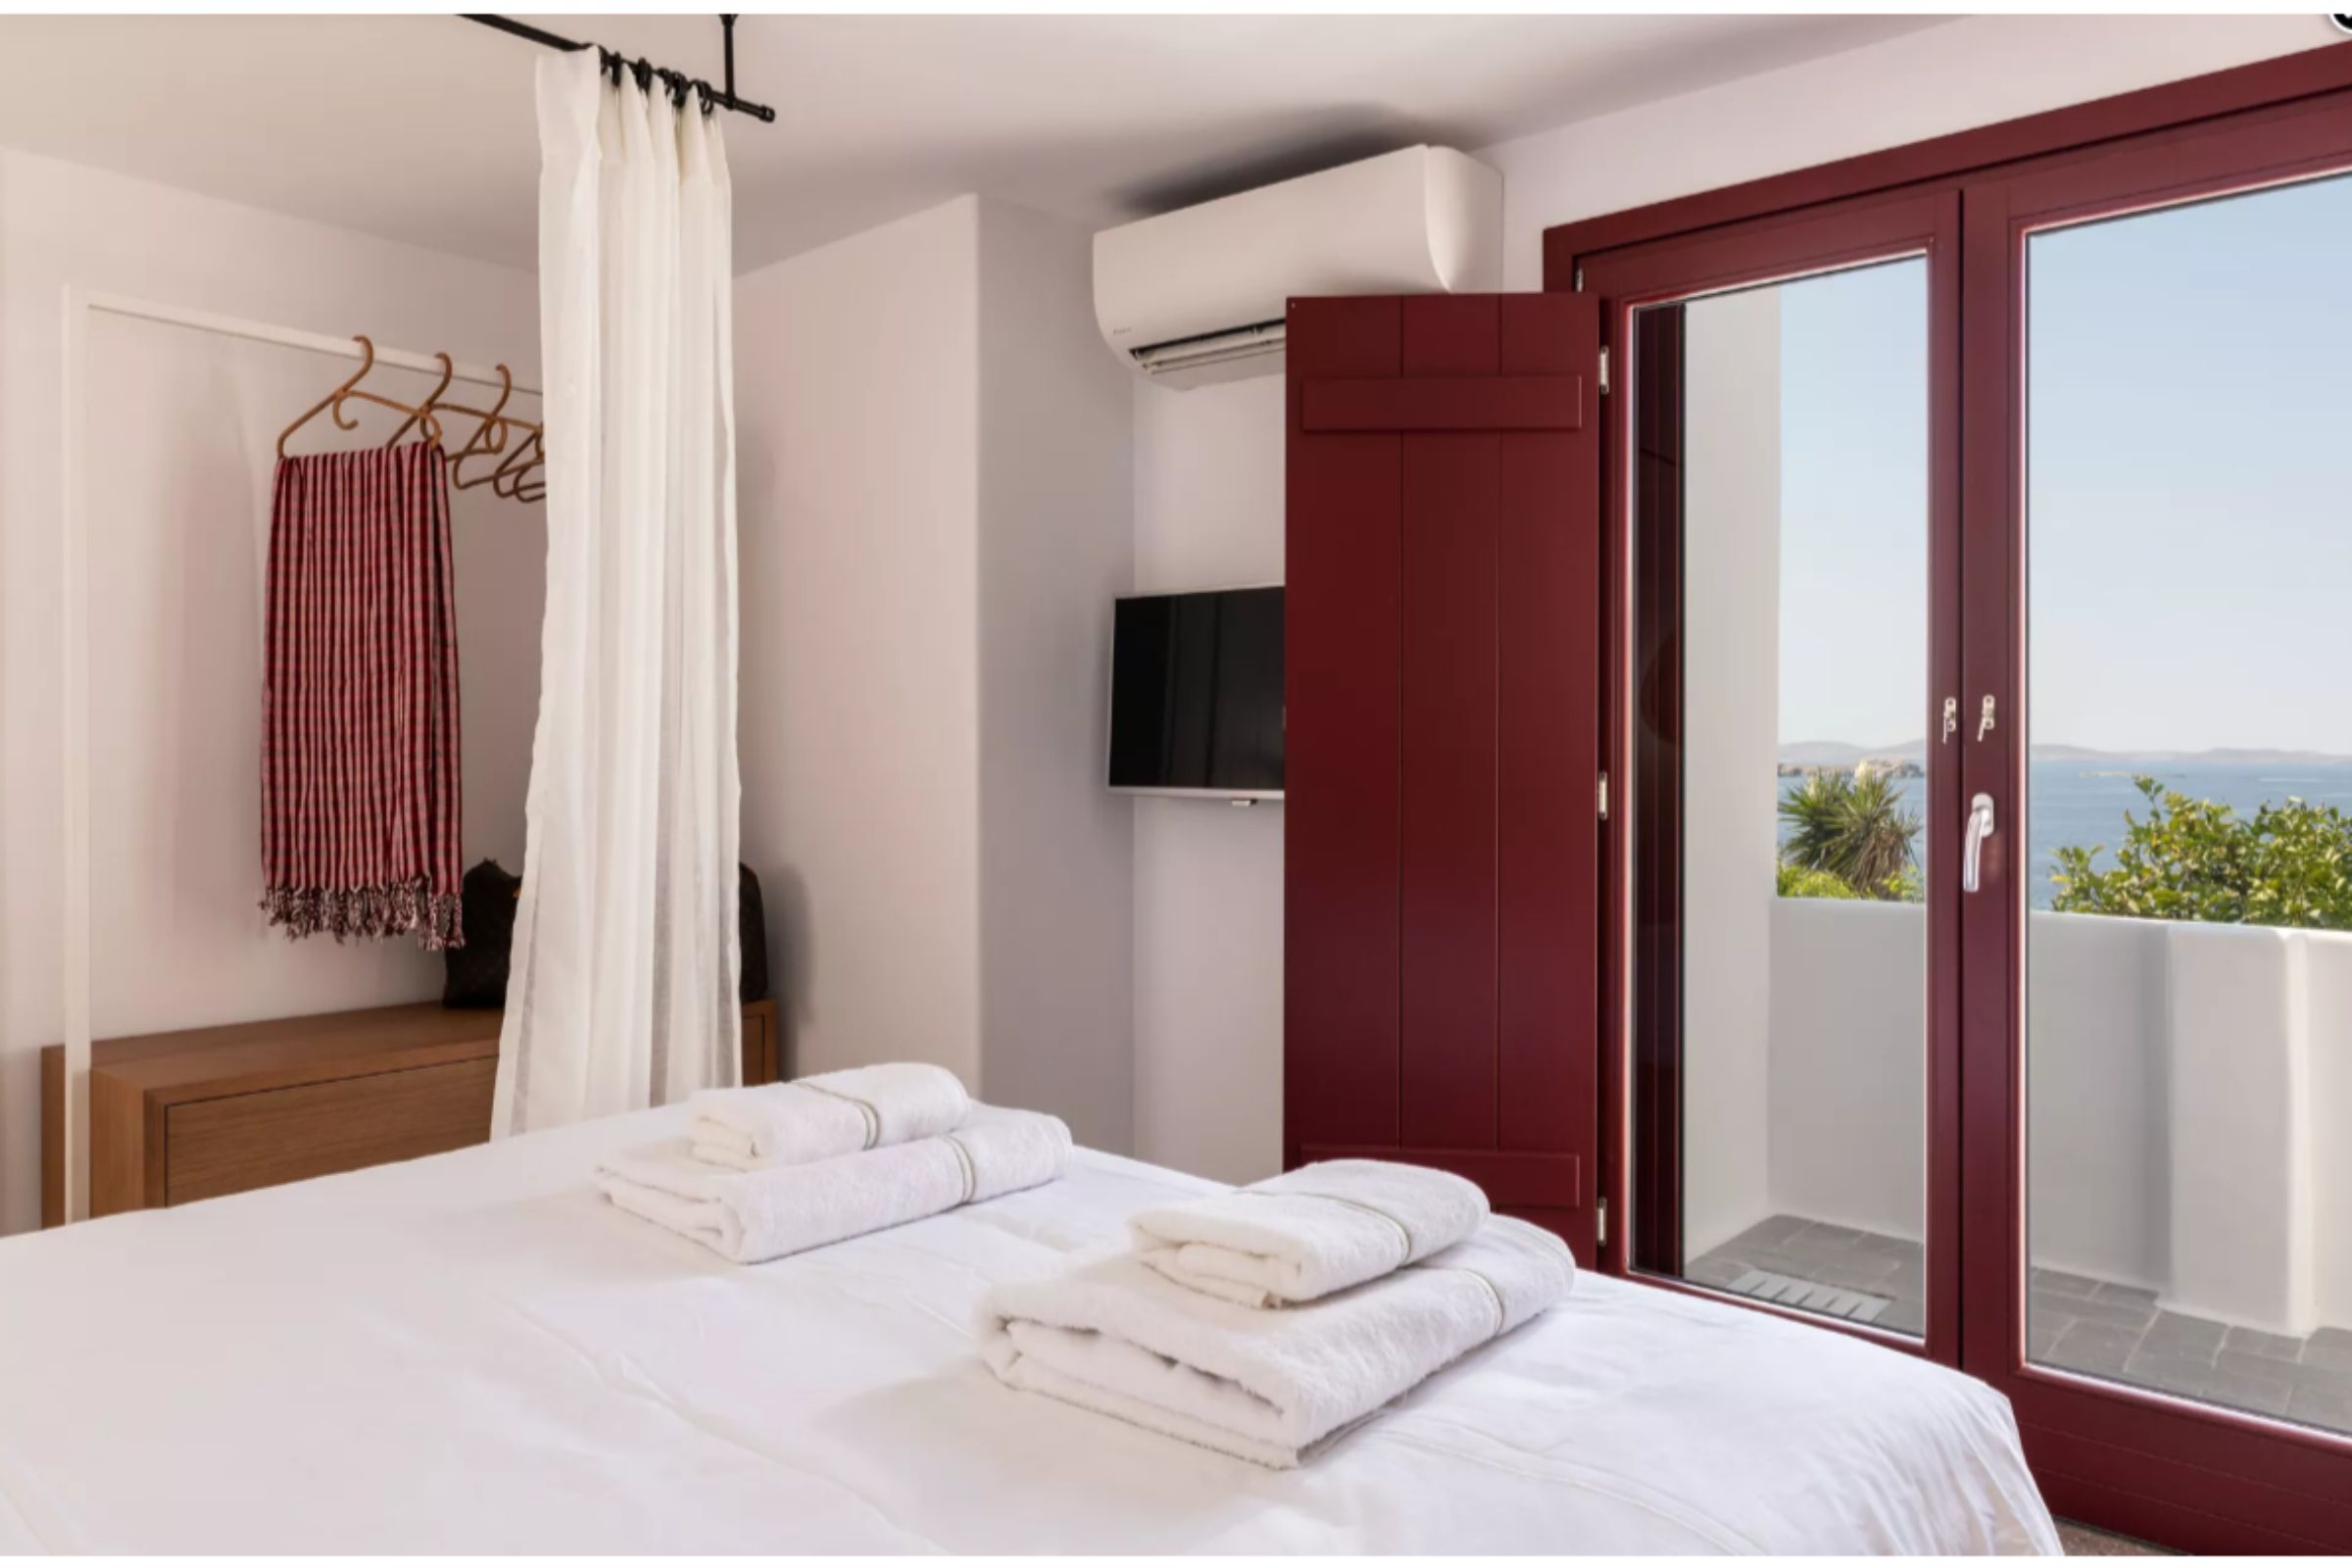 3 bedroom villas mykonos